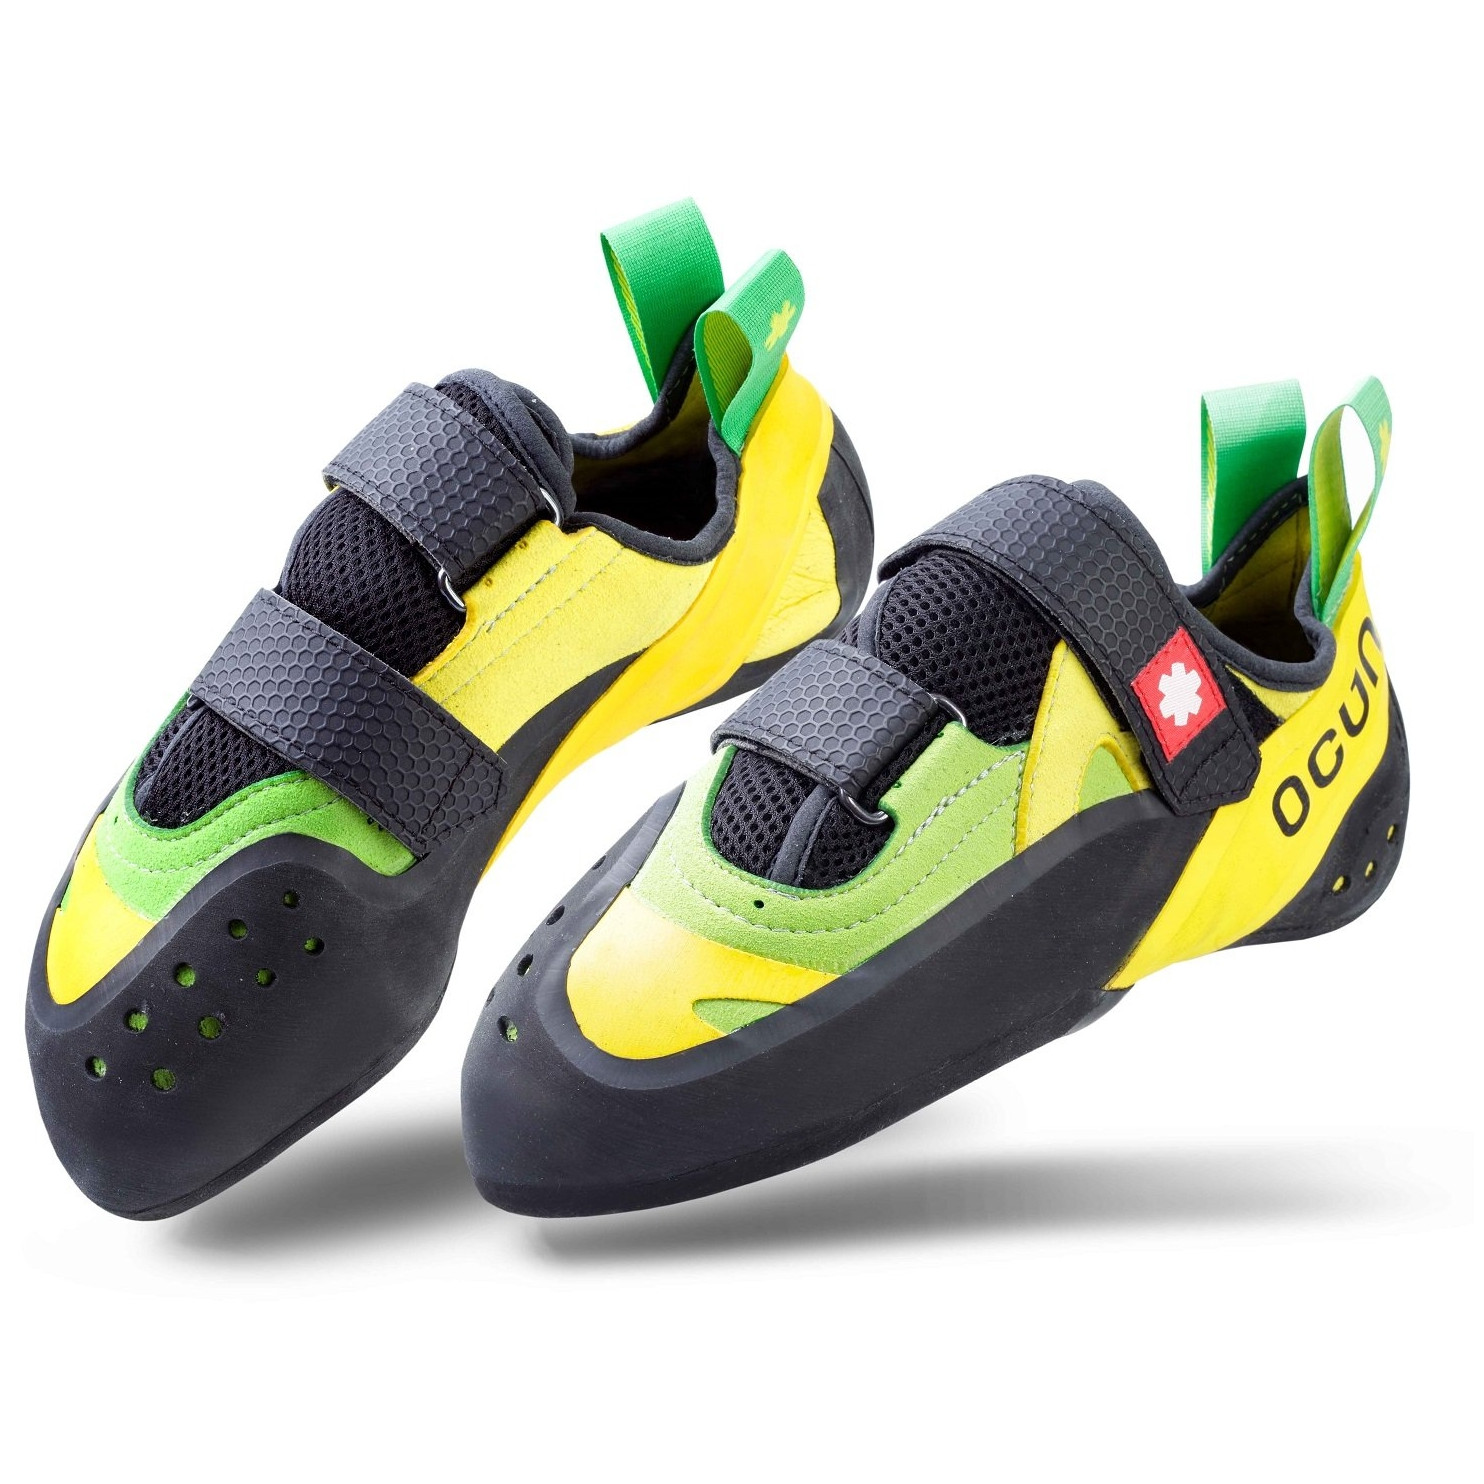 Lezečky Ocún Oxi QC Velikost bot (EU): 48 / Barva: žlutá/zelená